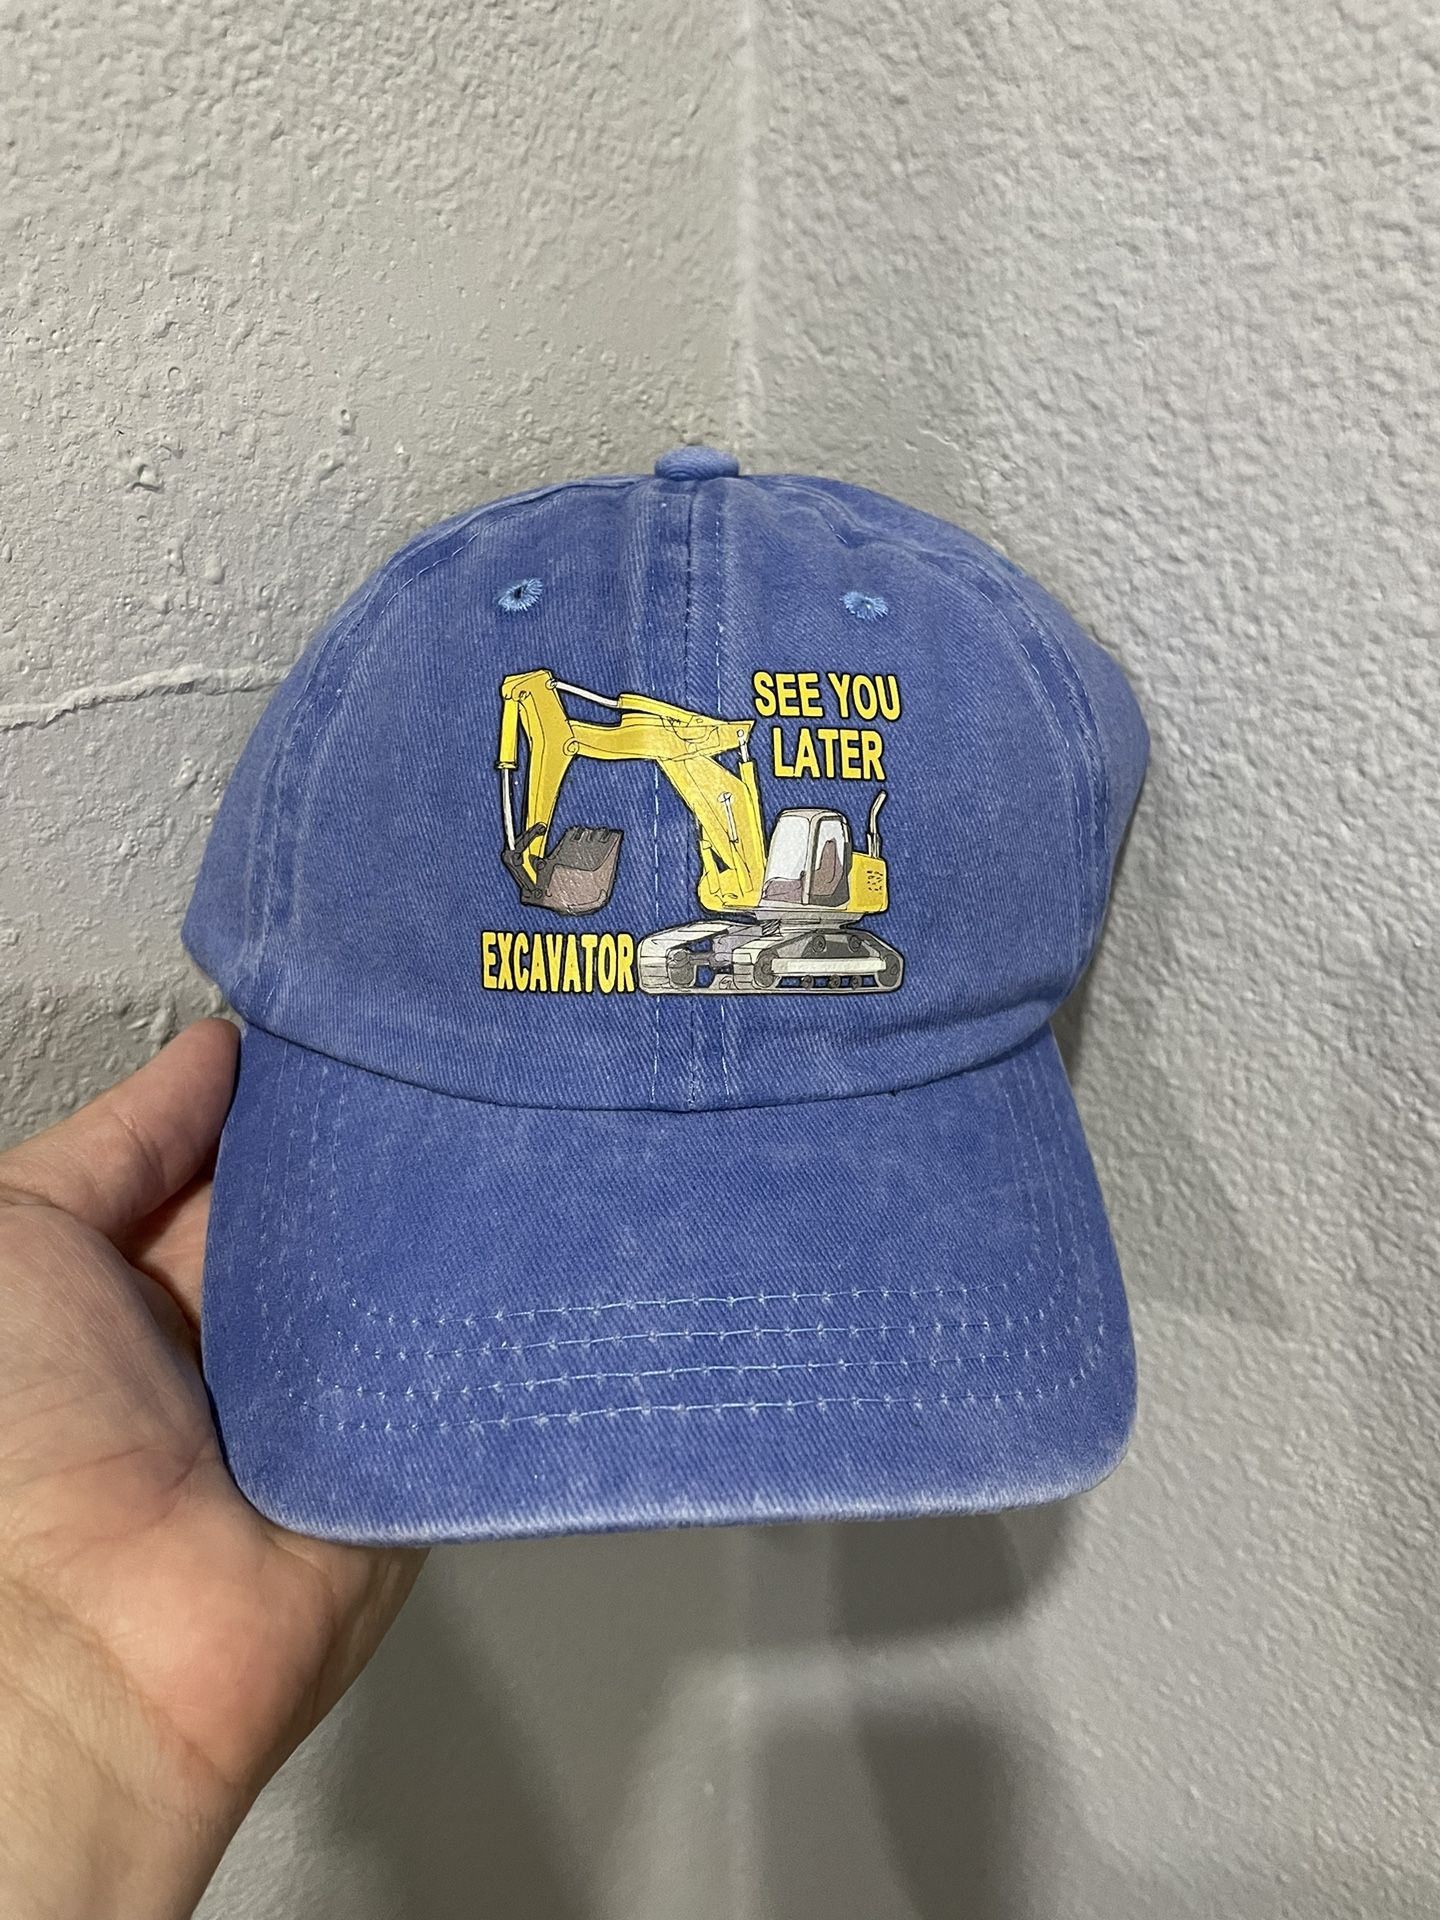 Excavator Hat (New In Packaging)